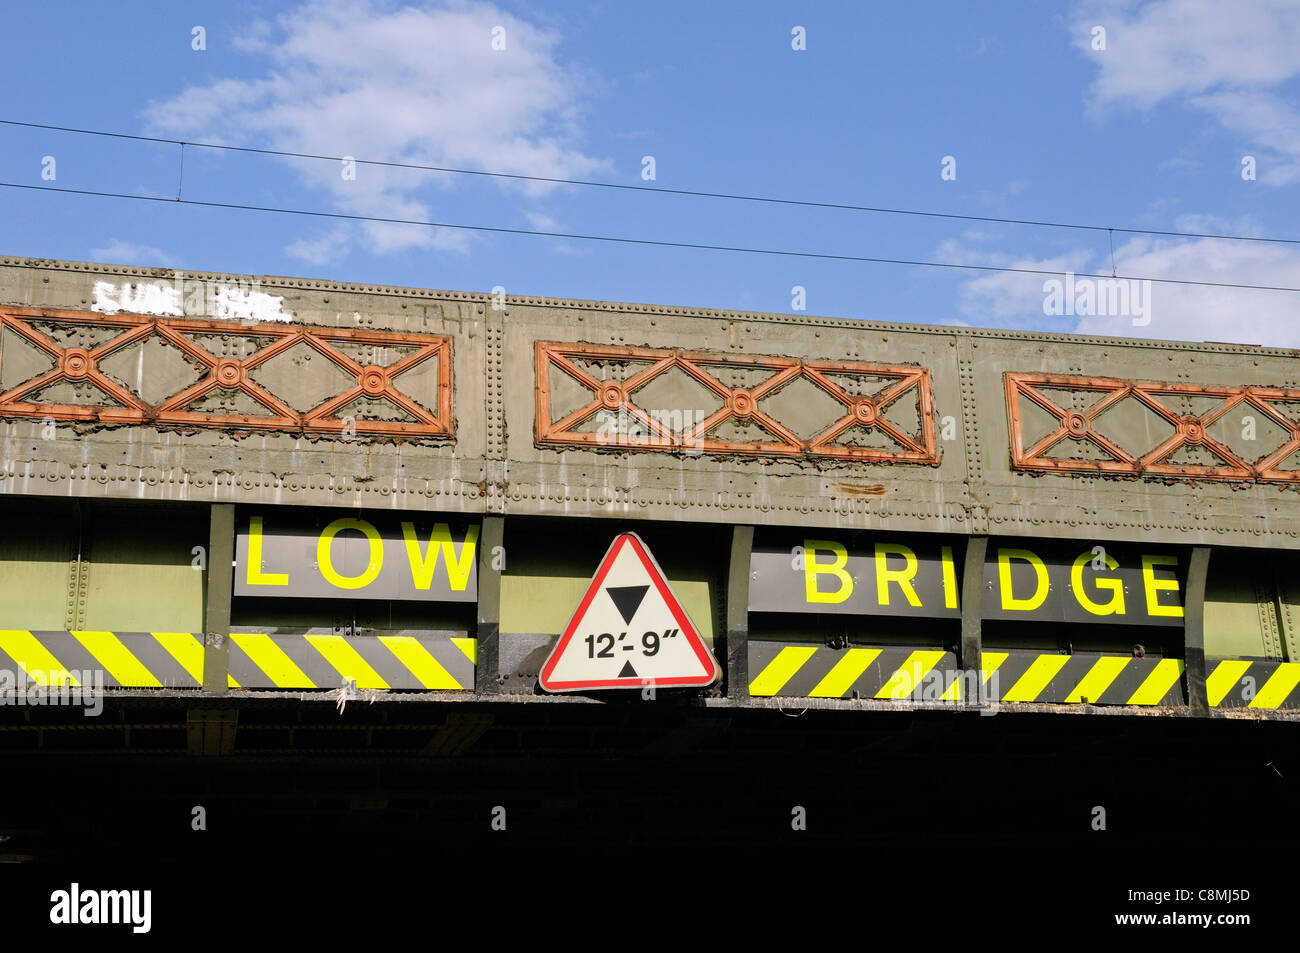 Low Bridge sign on bridge with hight restriction showing, Finsbury Park London England UK Stock Photo